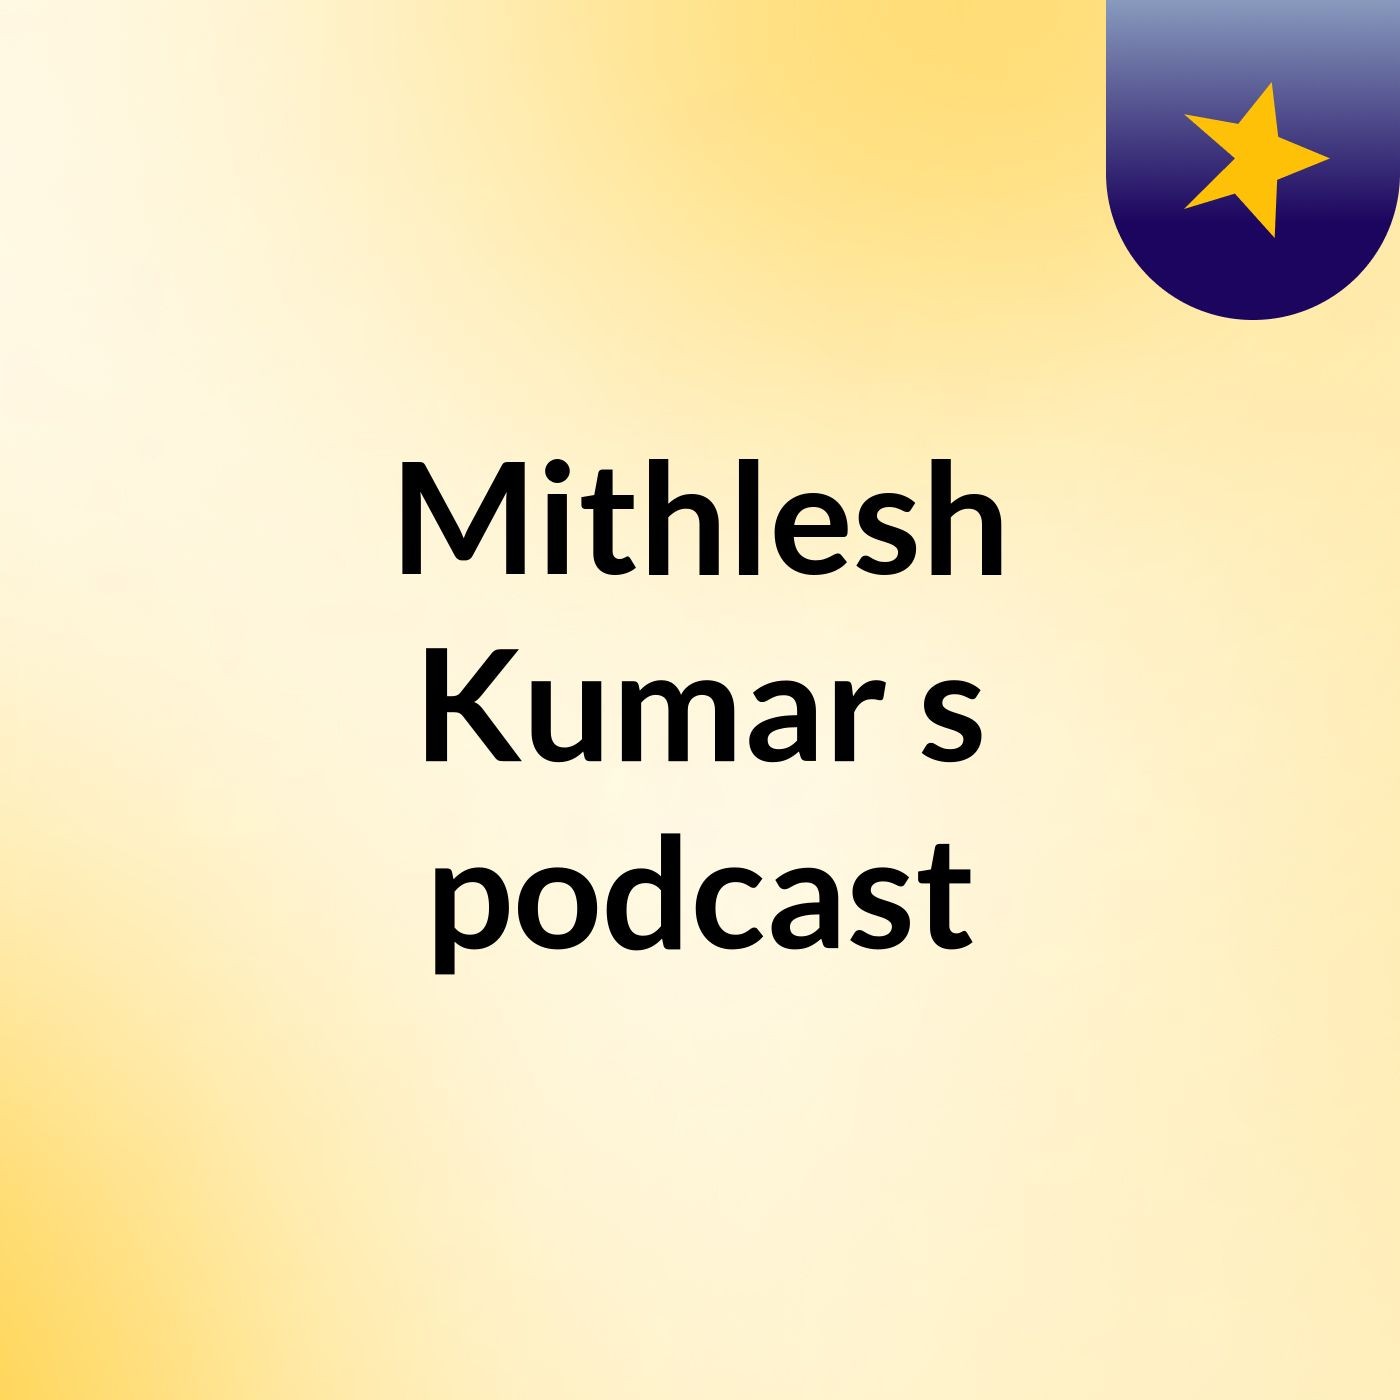 Mithlesh Kumar's podcast